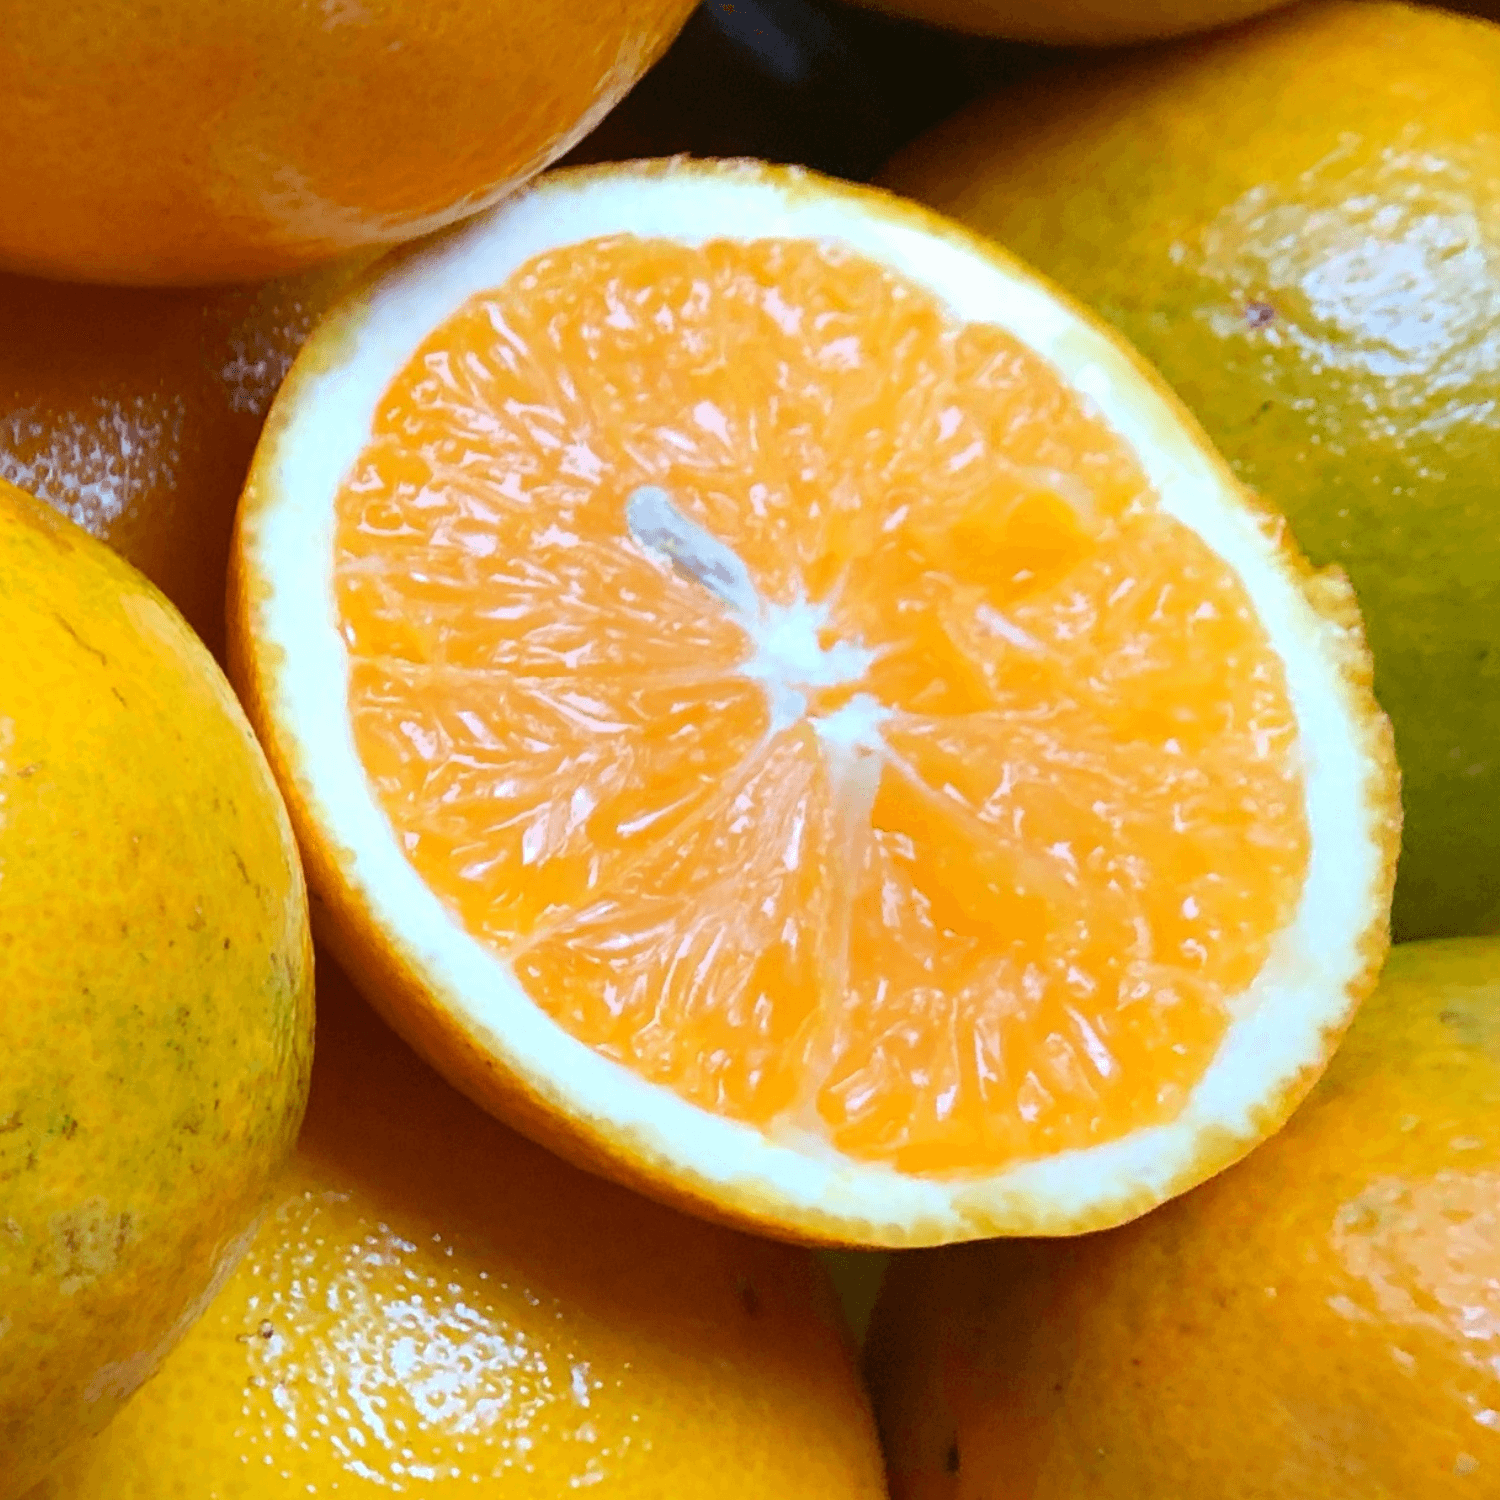 Oranger - Citrus sinensis - FLEURANDIE